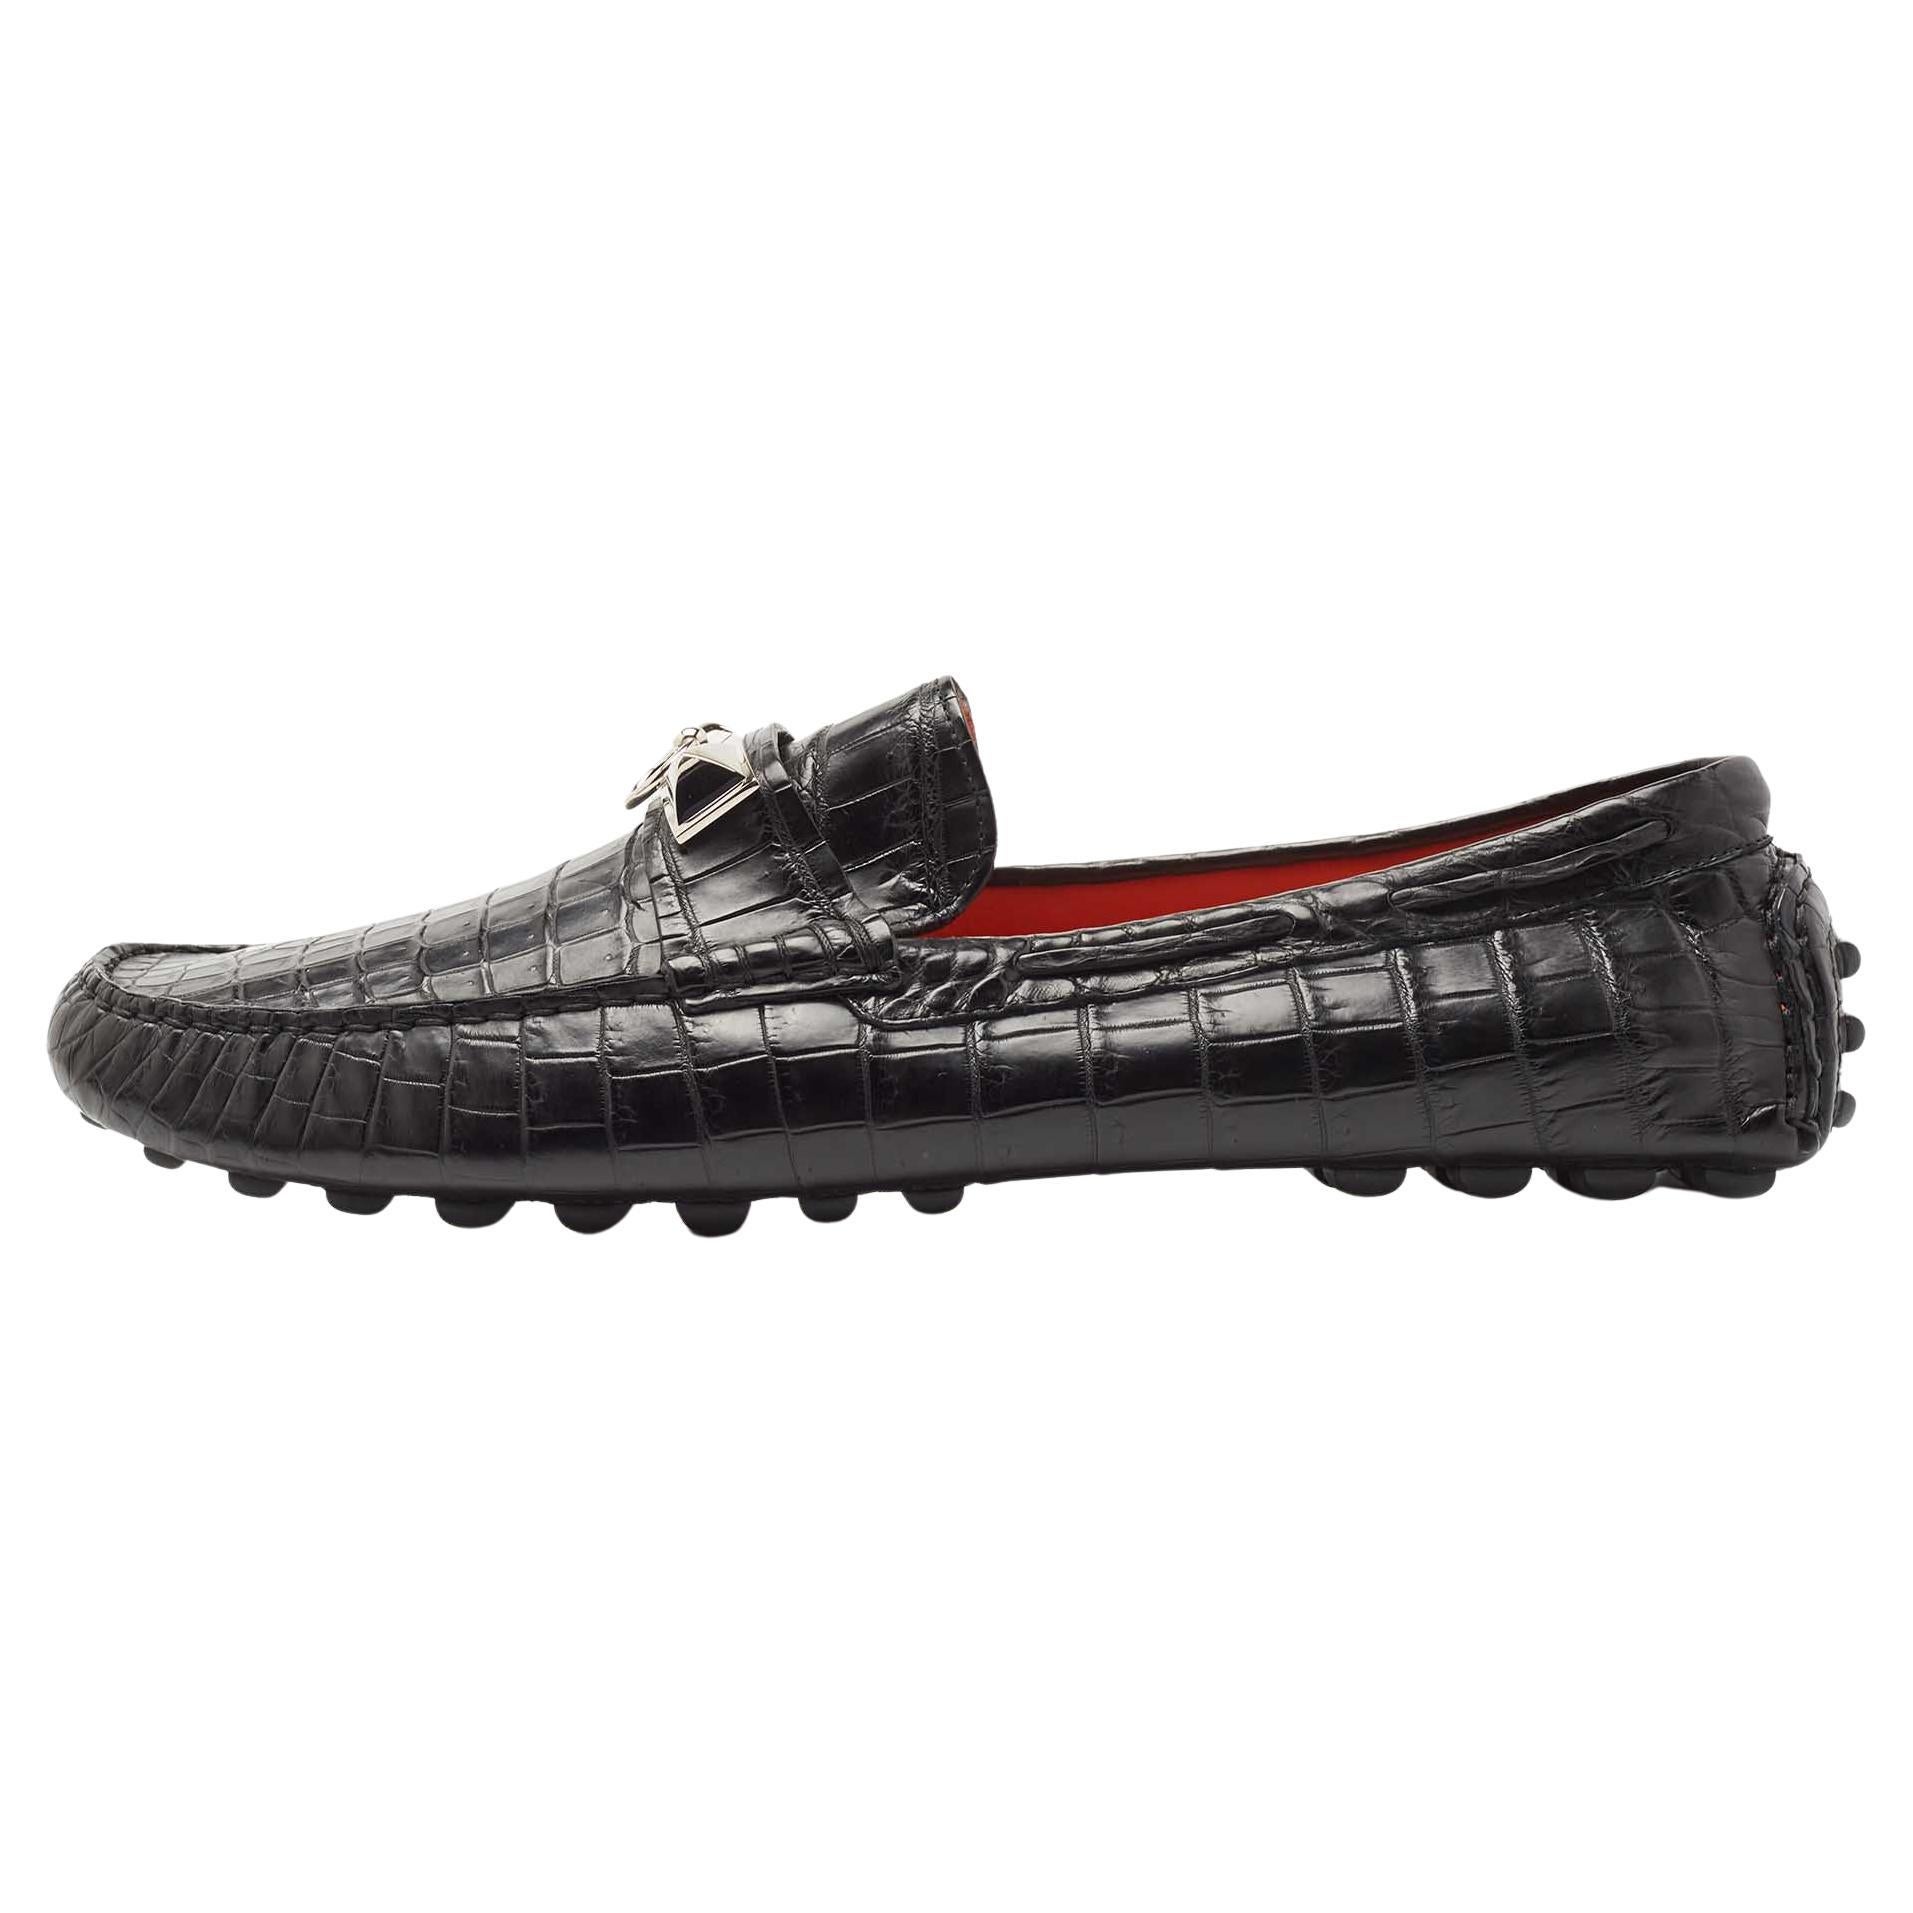 Hermes black crocodile loafers